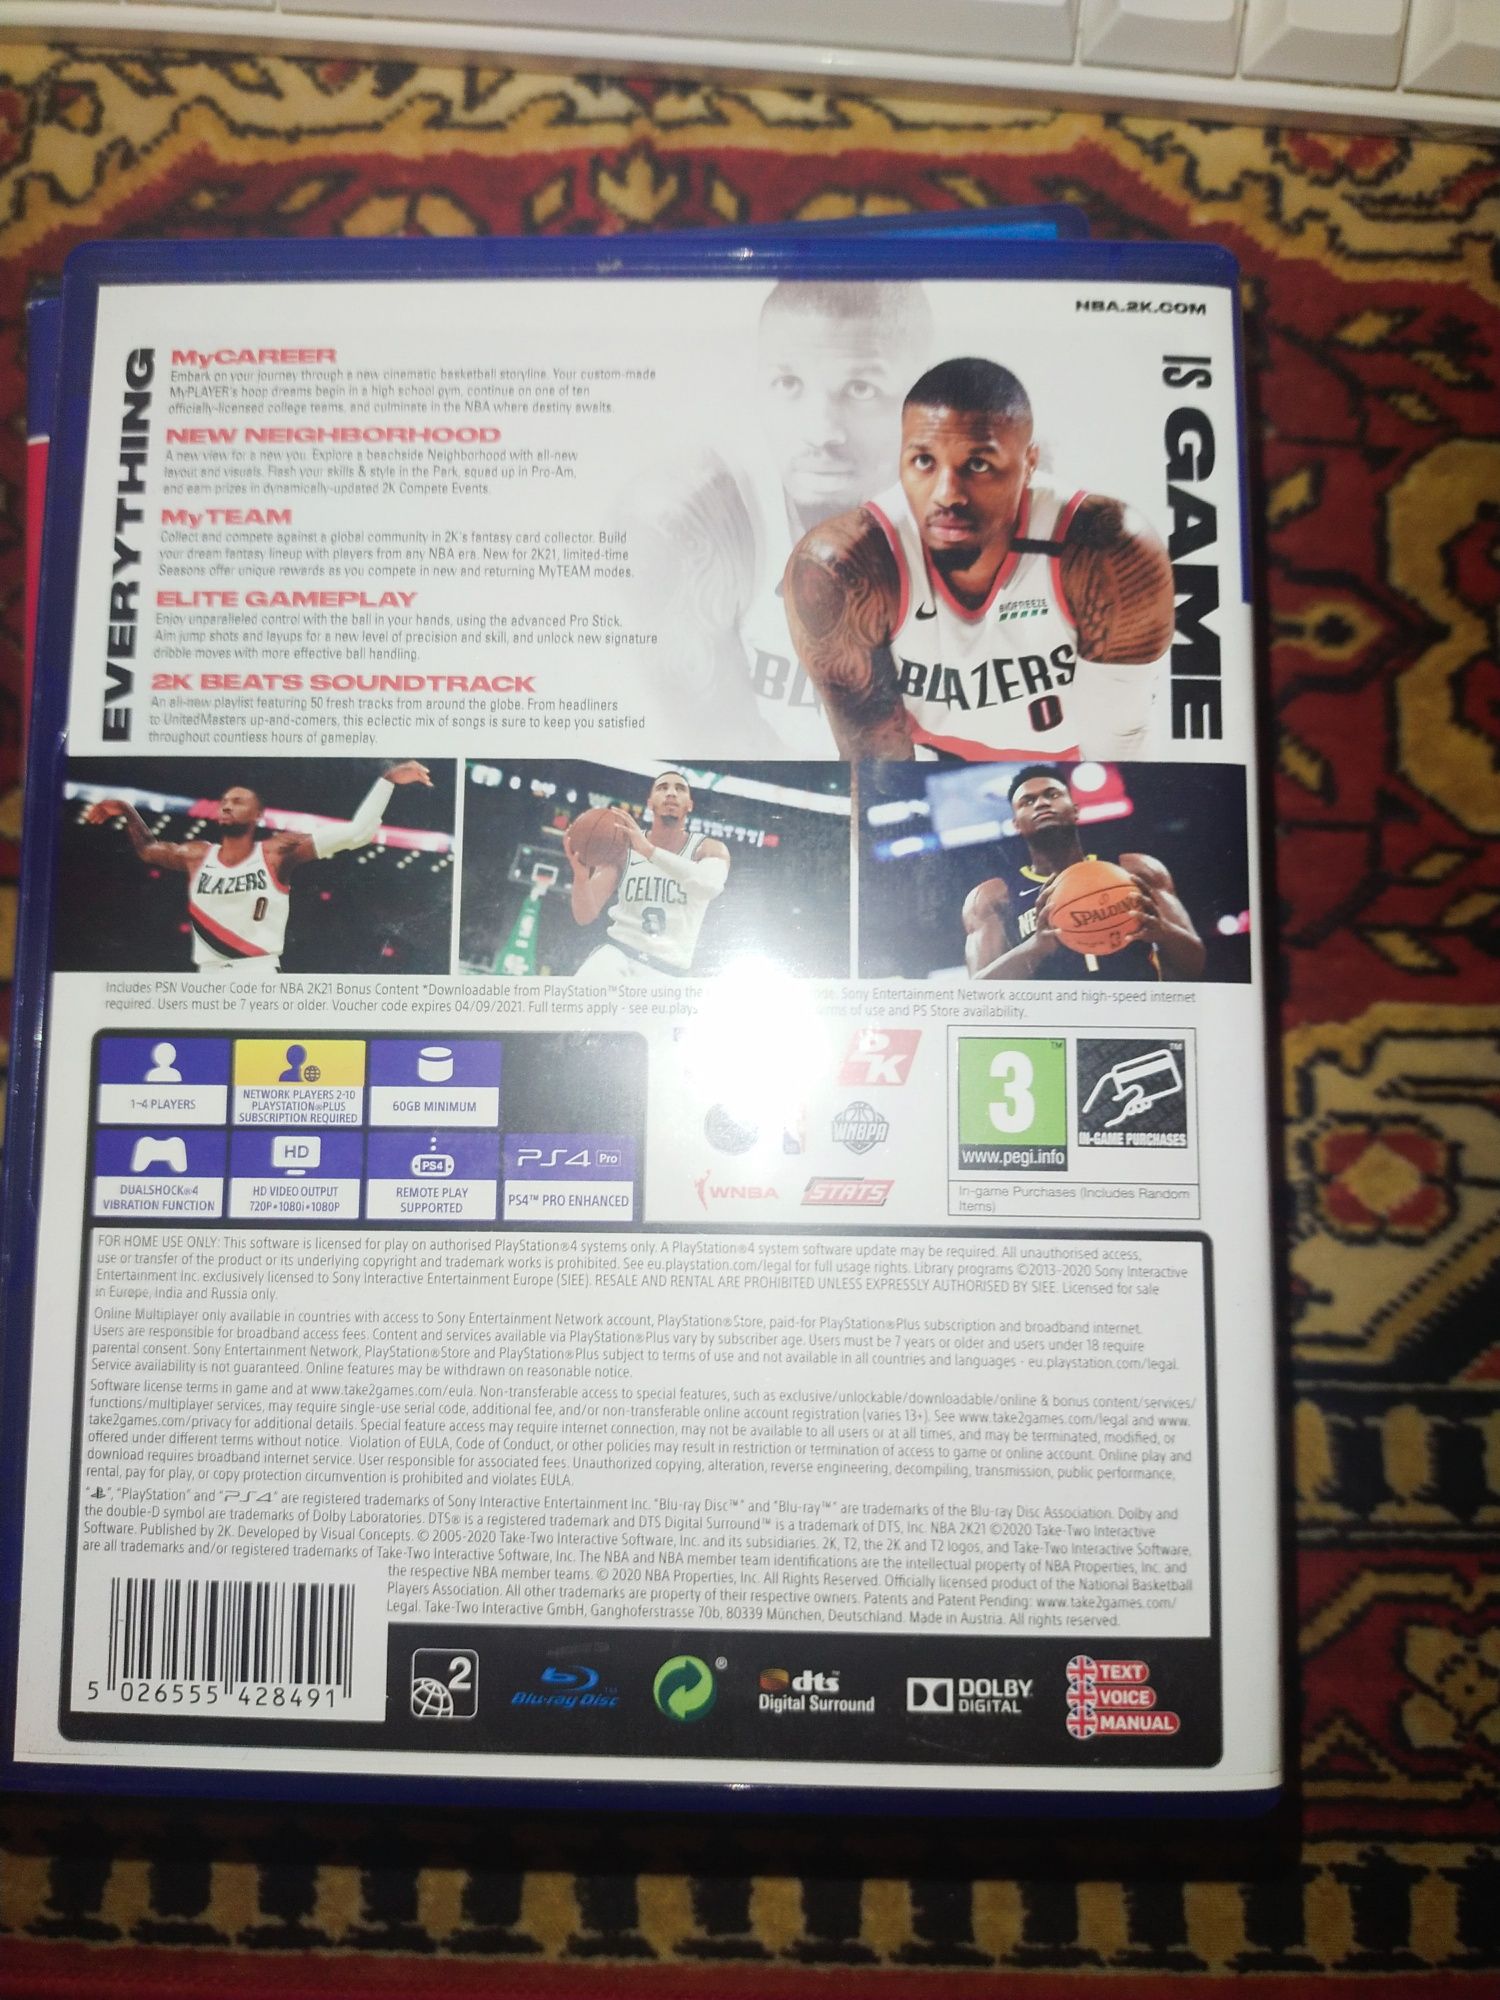 NBA 2K21 na PS4 .